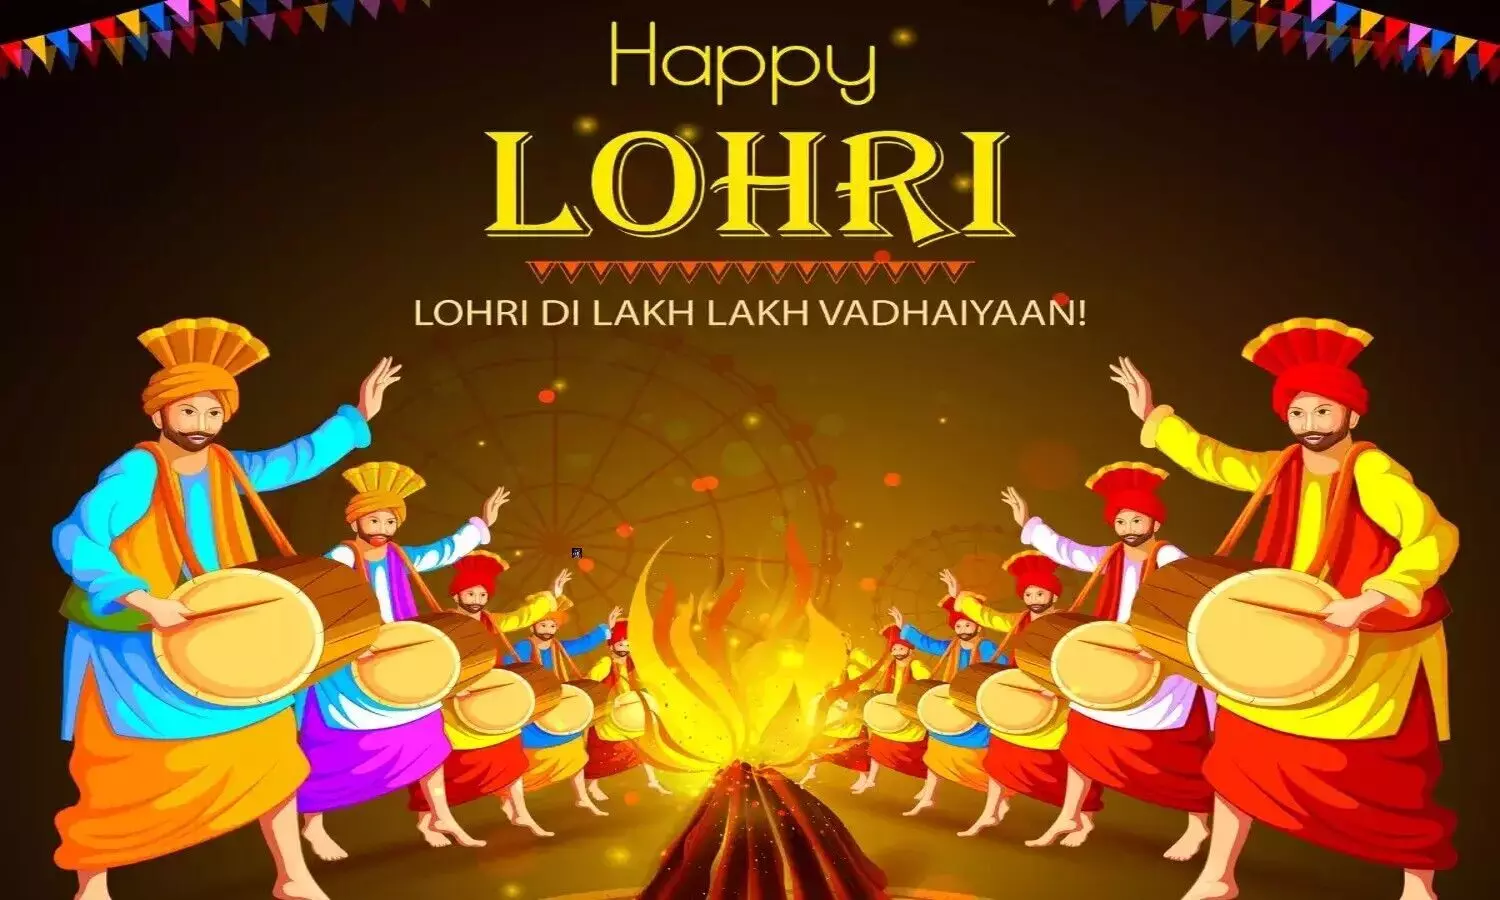 lohri wishes in hindi